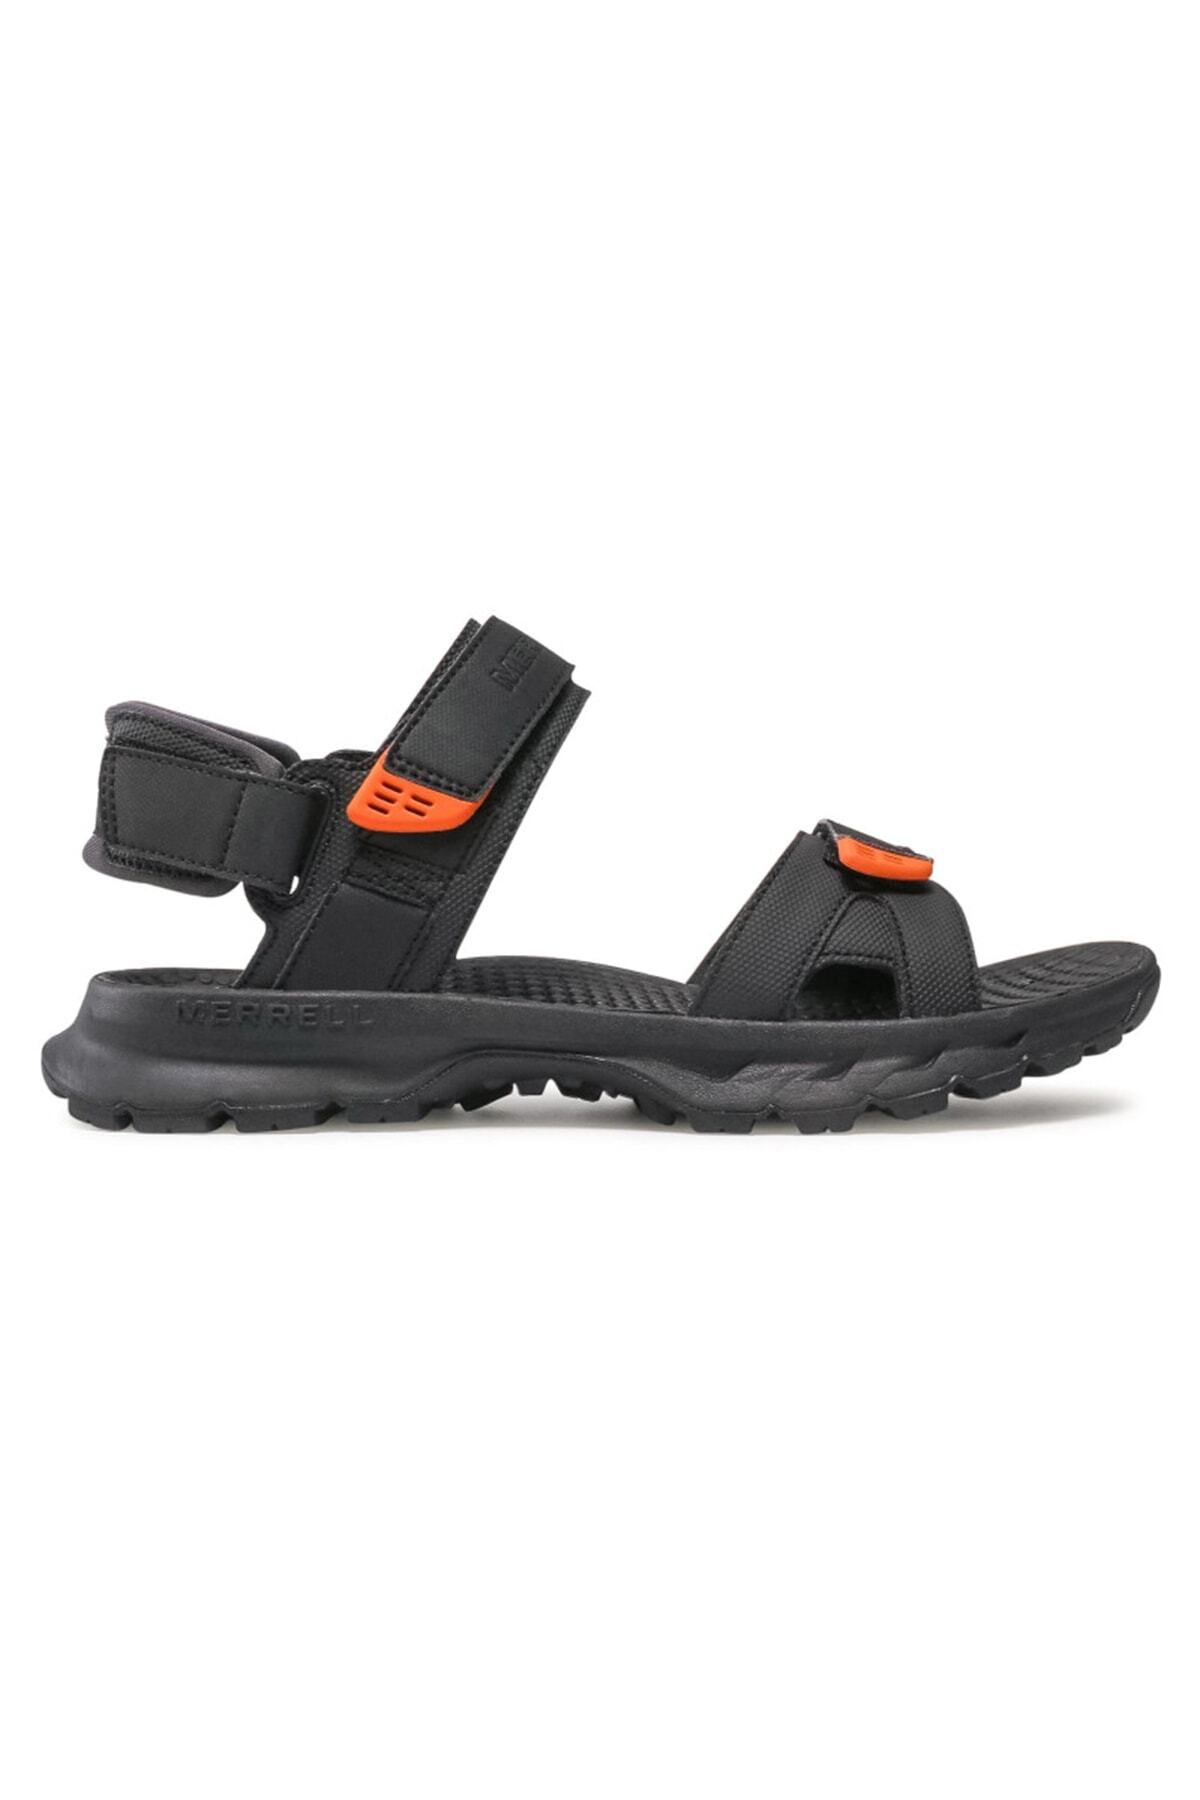 Merrell Cedrus Convert 3 MEN Multi Color Sandals Daily J036173